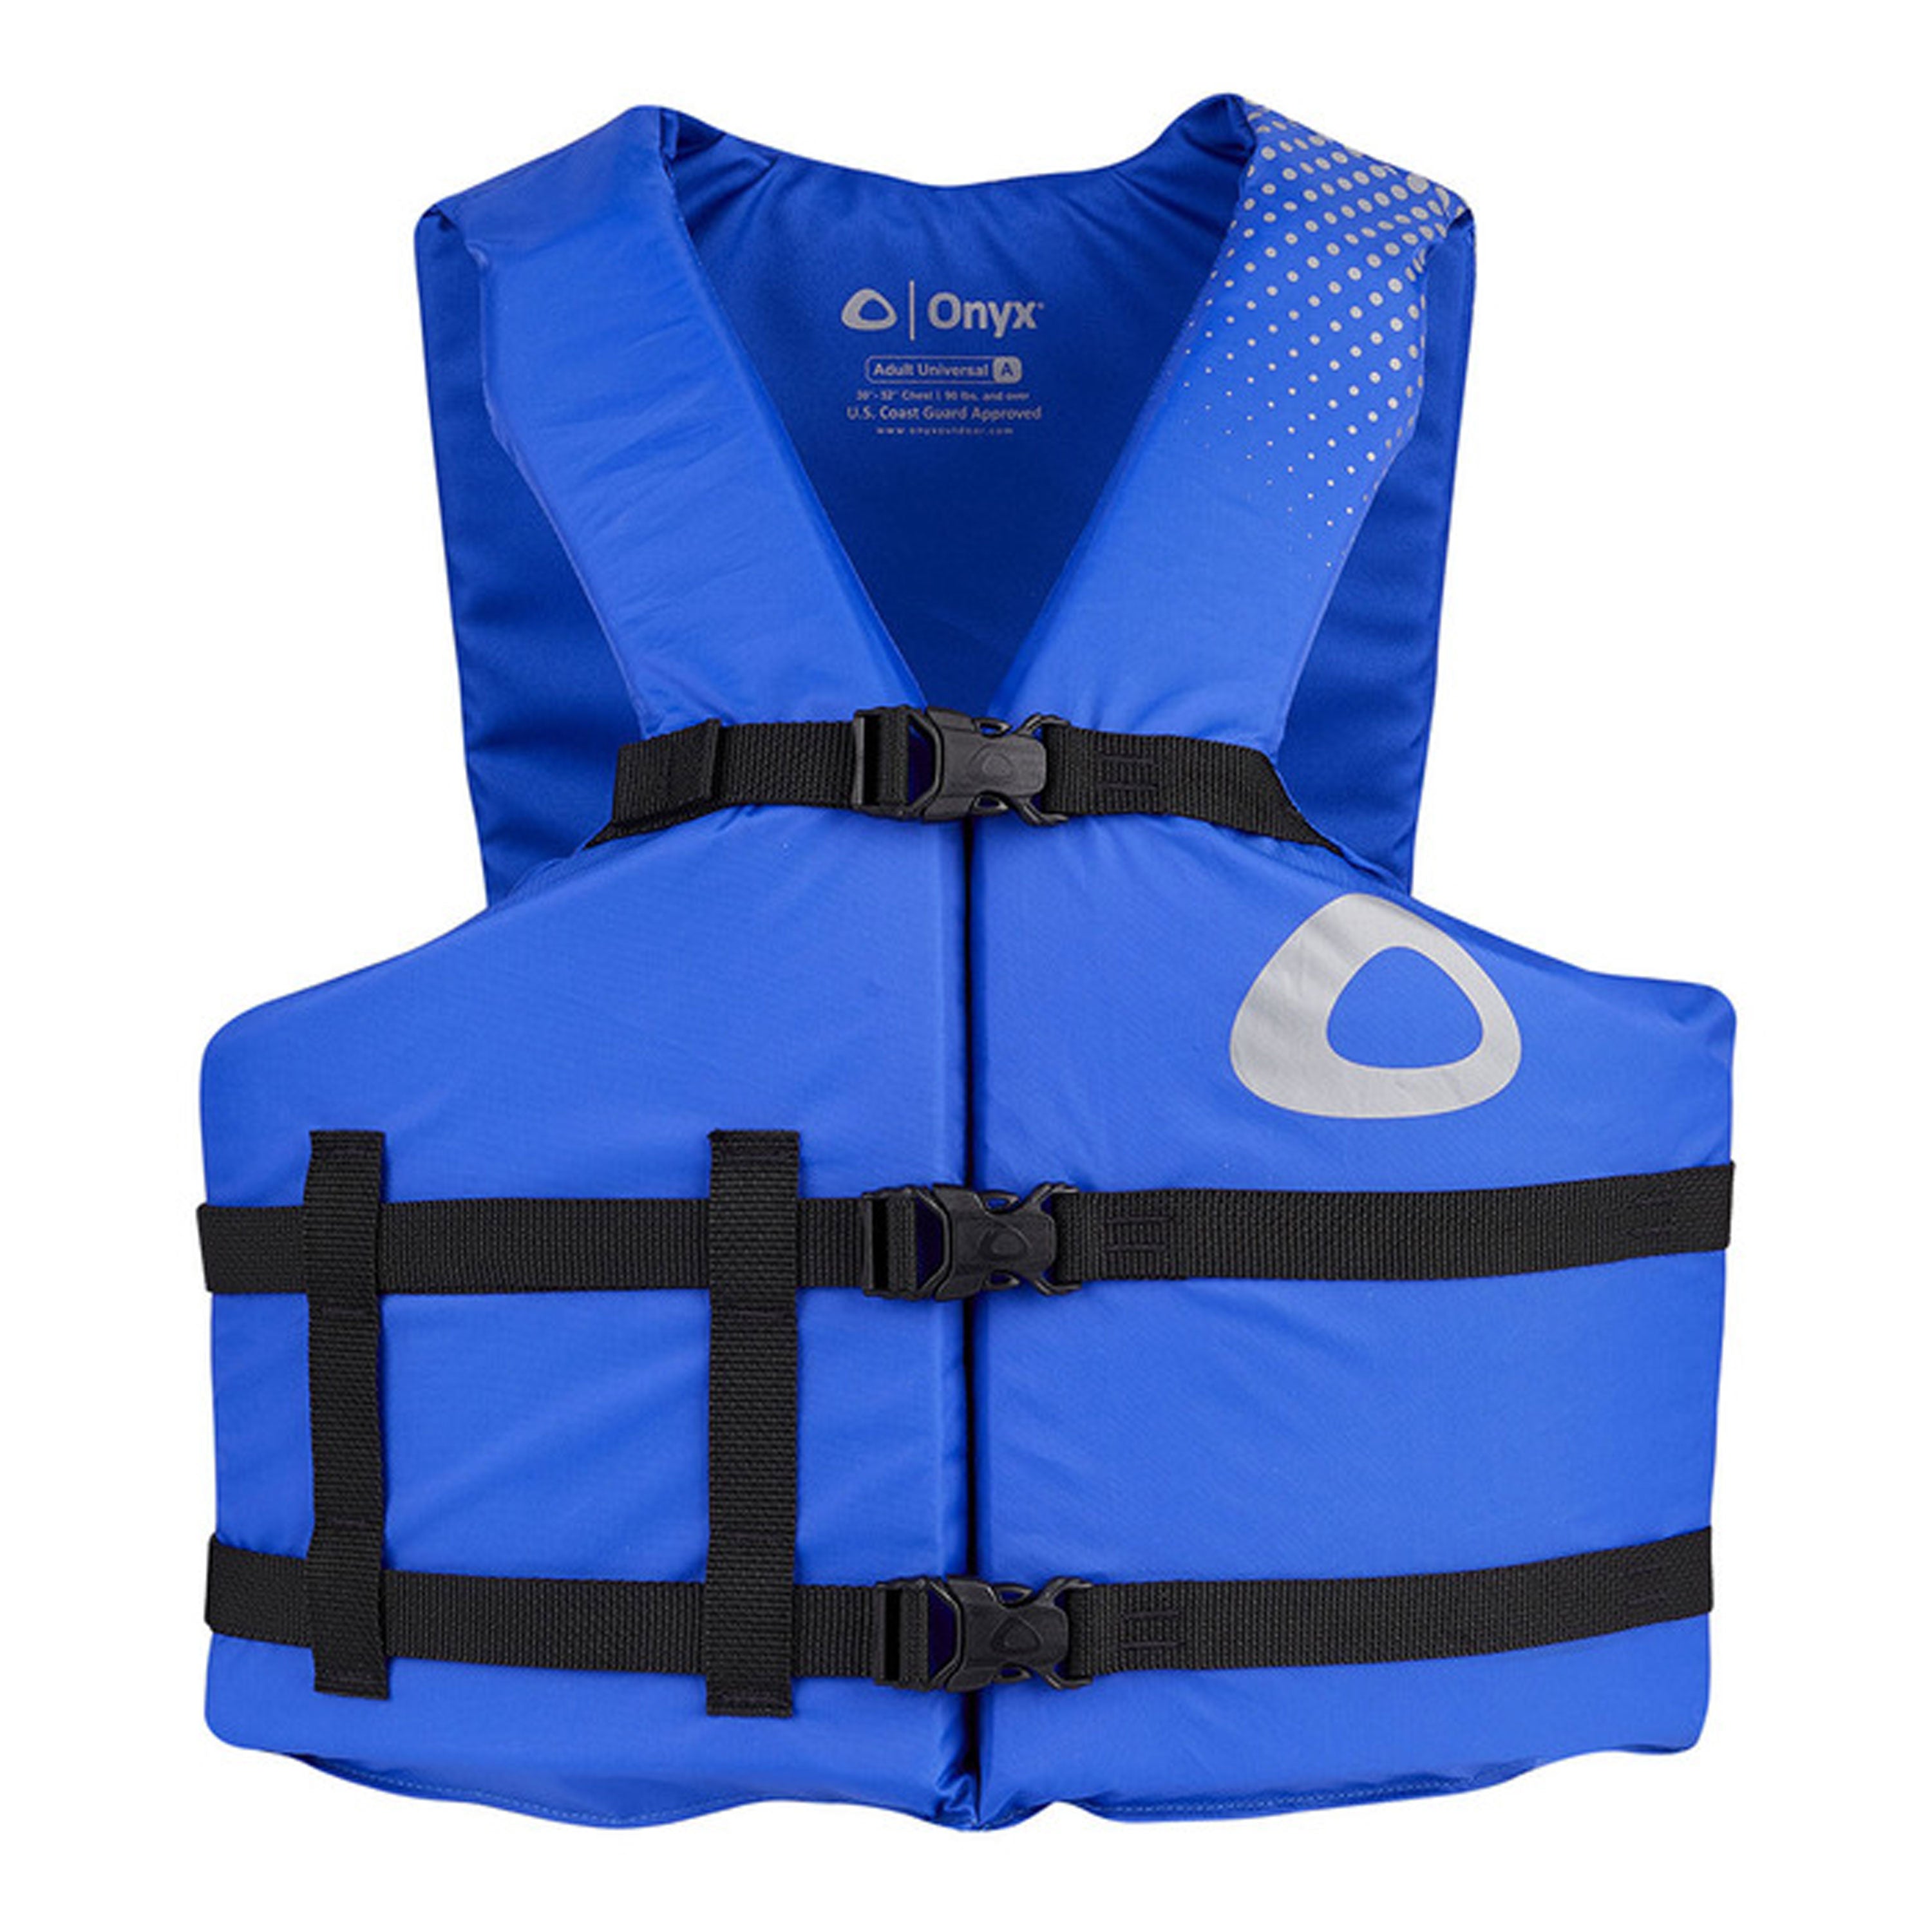 Onyx 103700-500-004-18 Adult Comfort General Purpose Vest - Universal, Blue